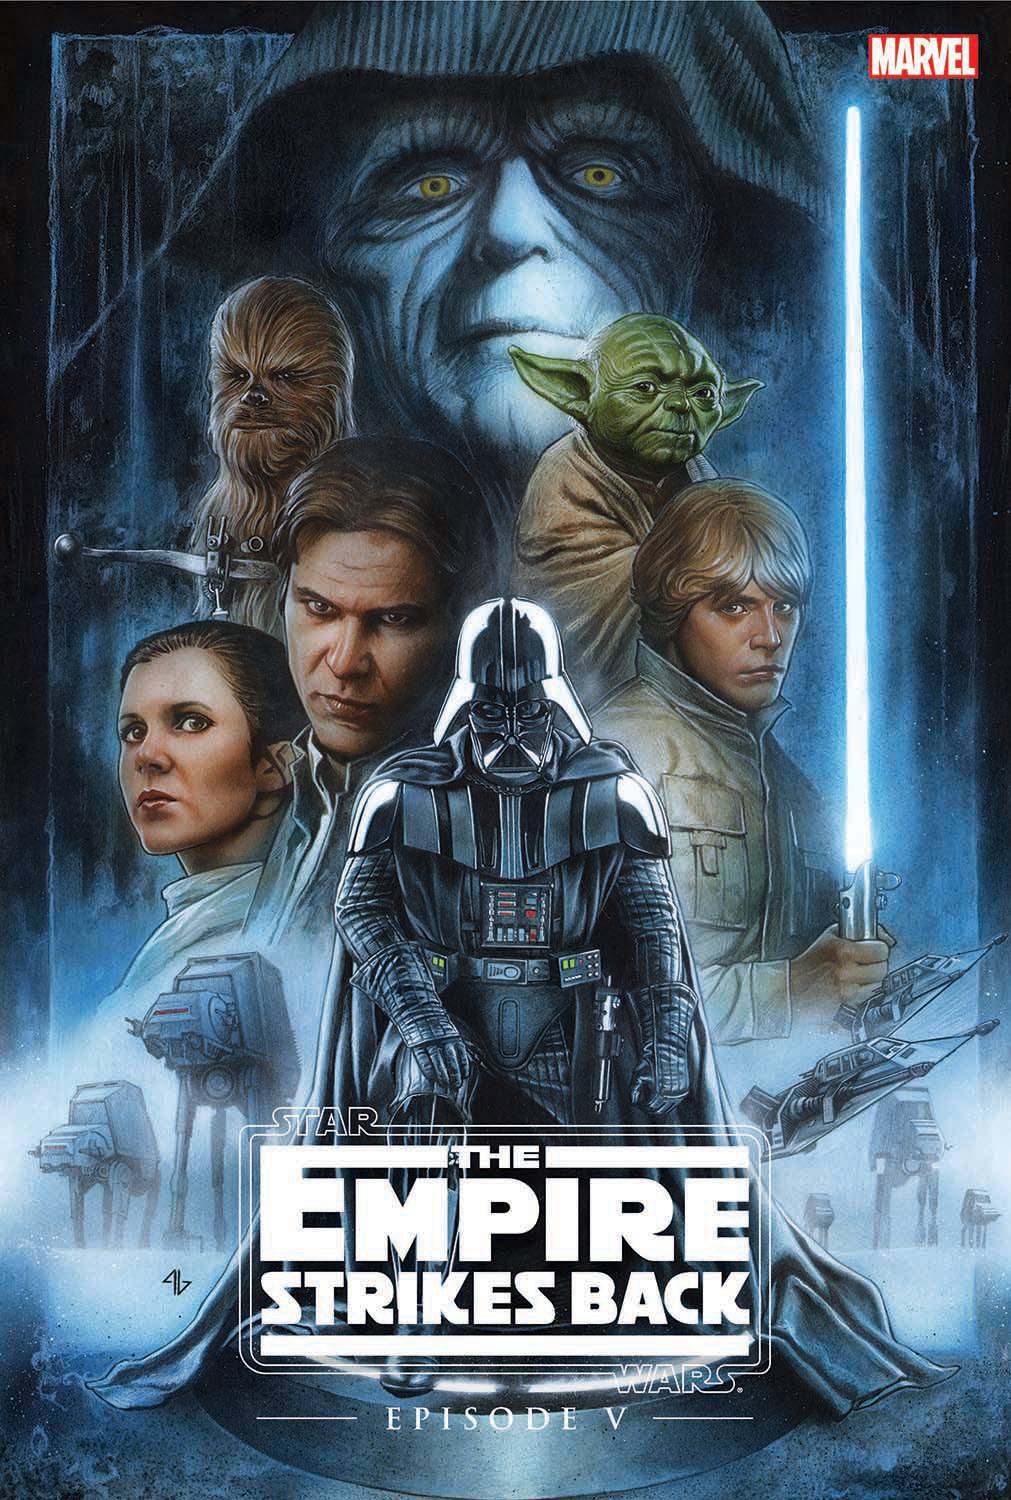 Star Wars Episode V: The Empire Strikes Back #6